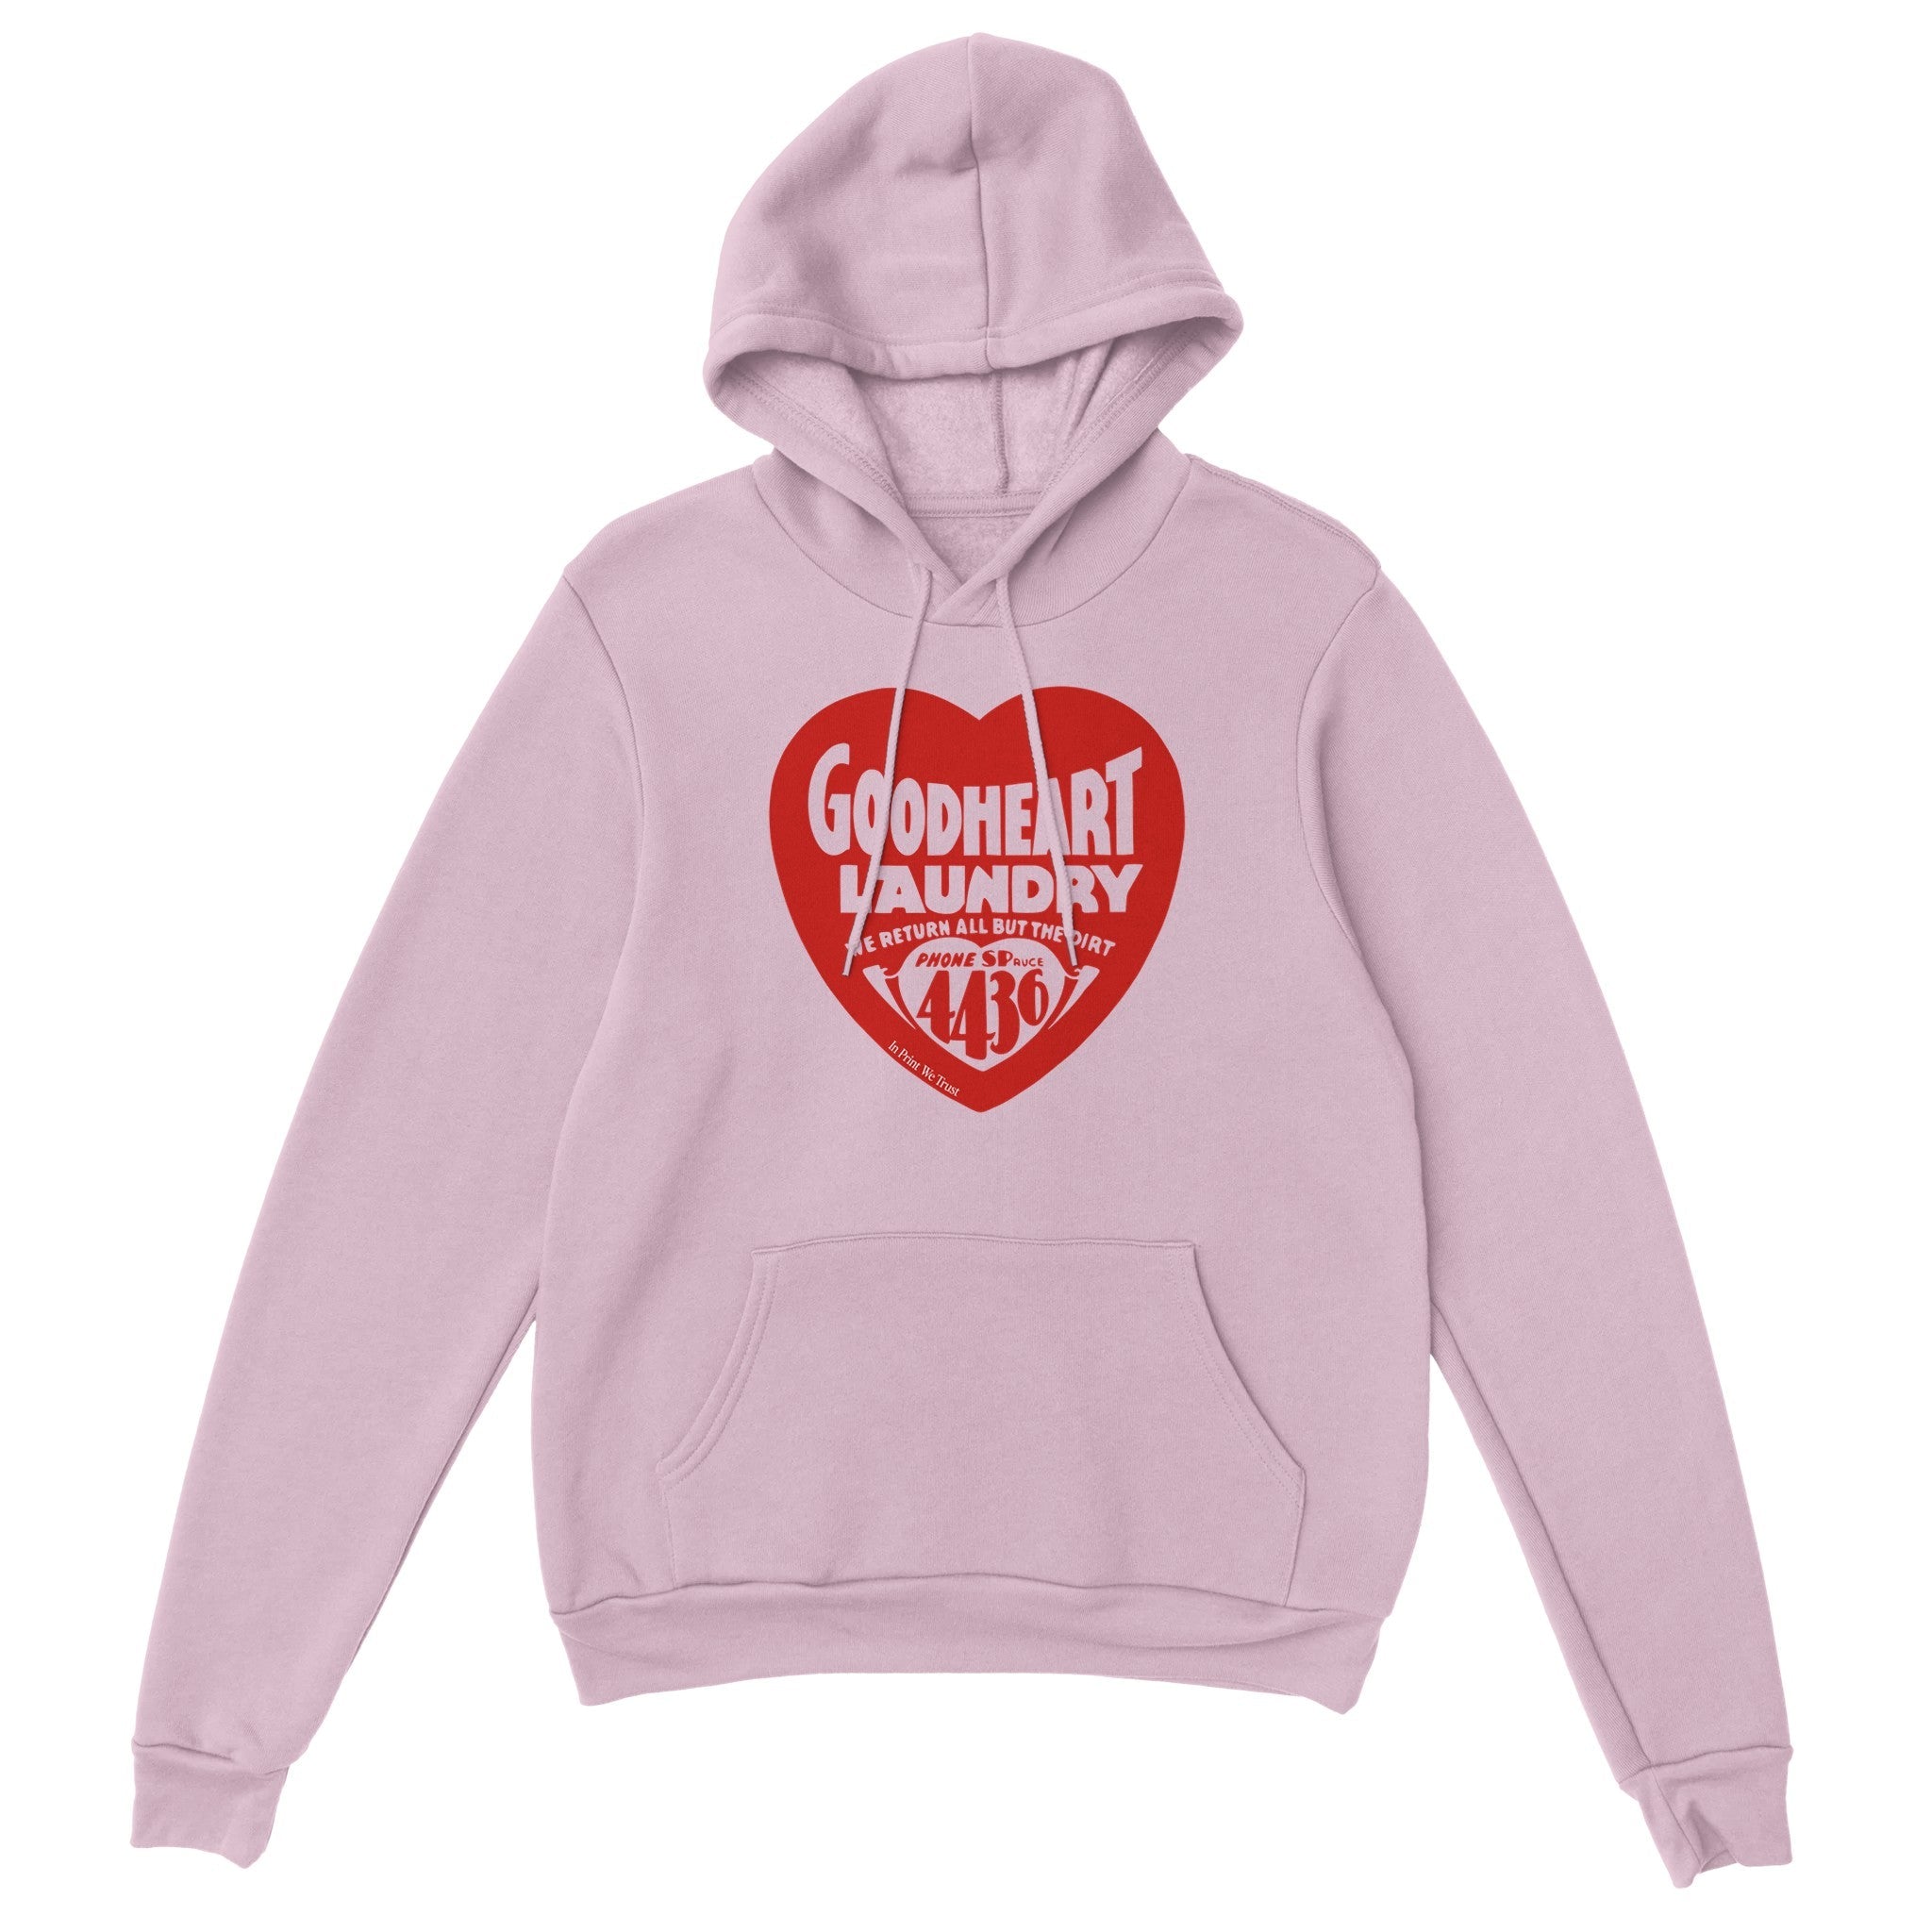 'Goodheart Laundry' hoodie - In Print We Trust